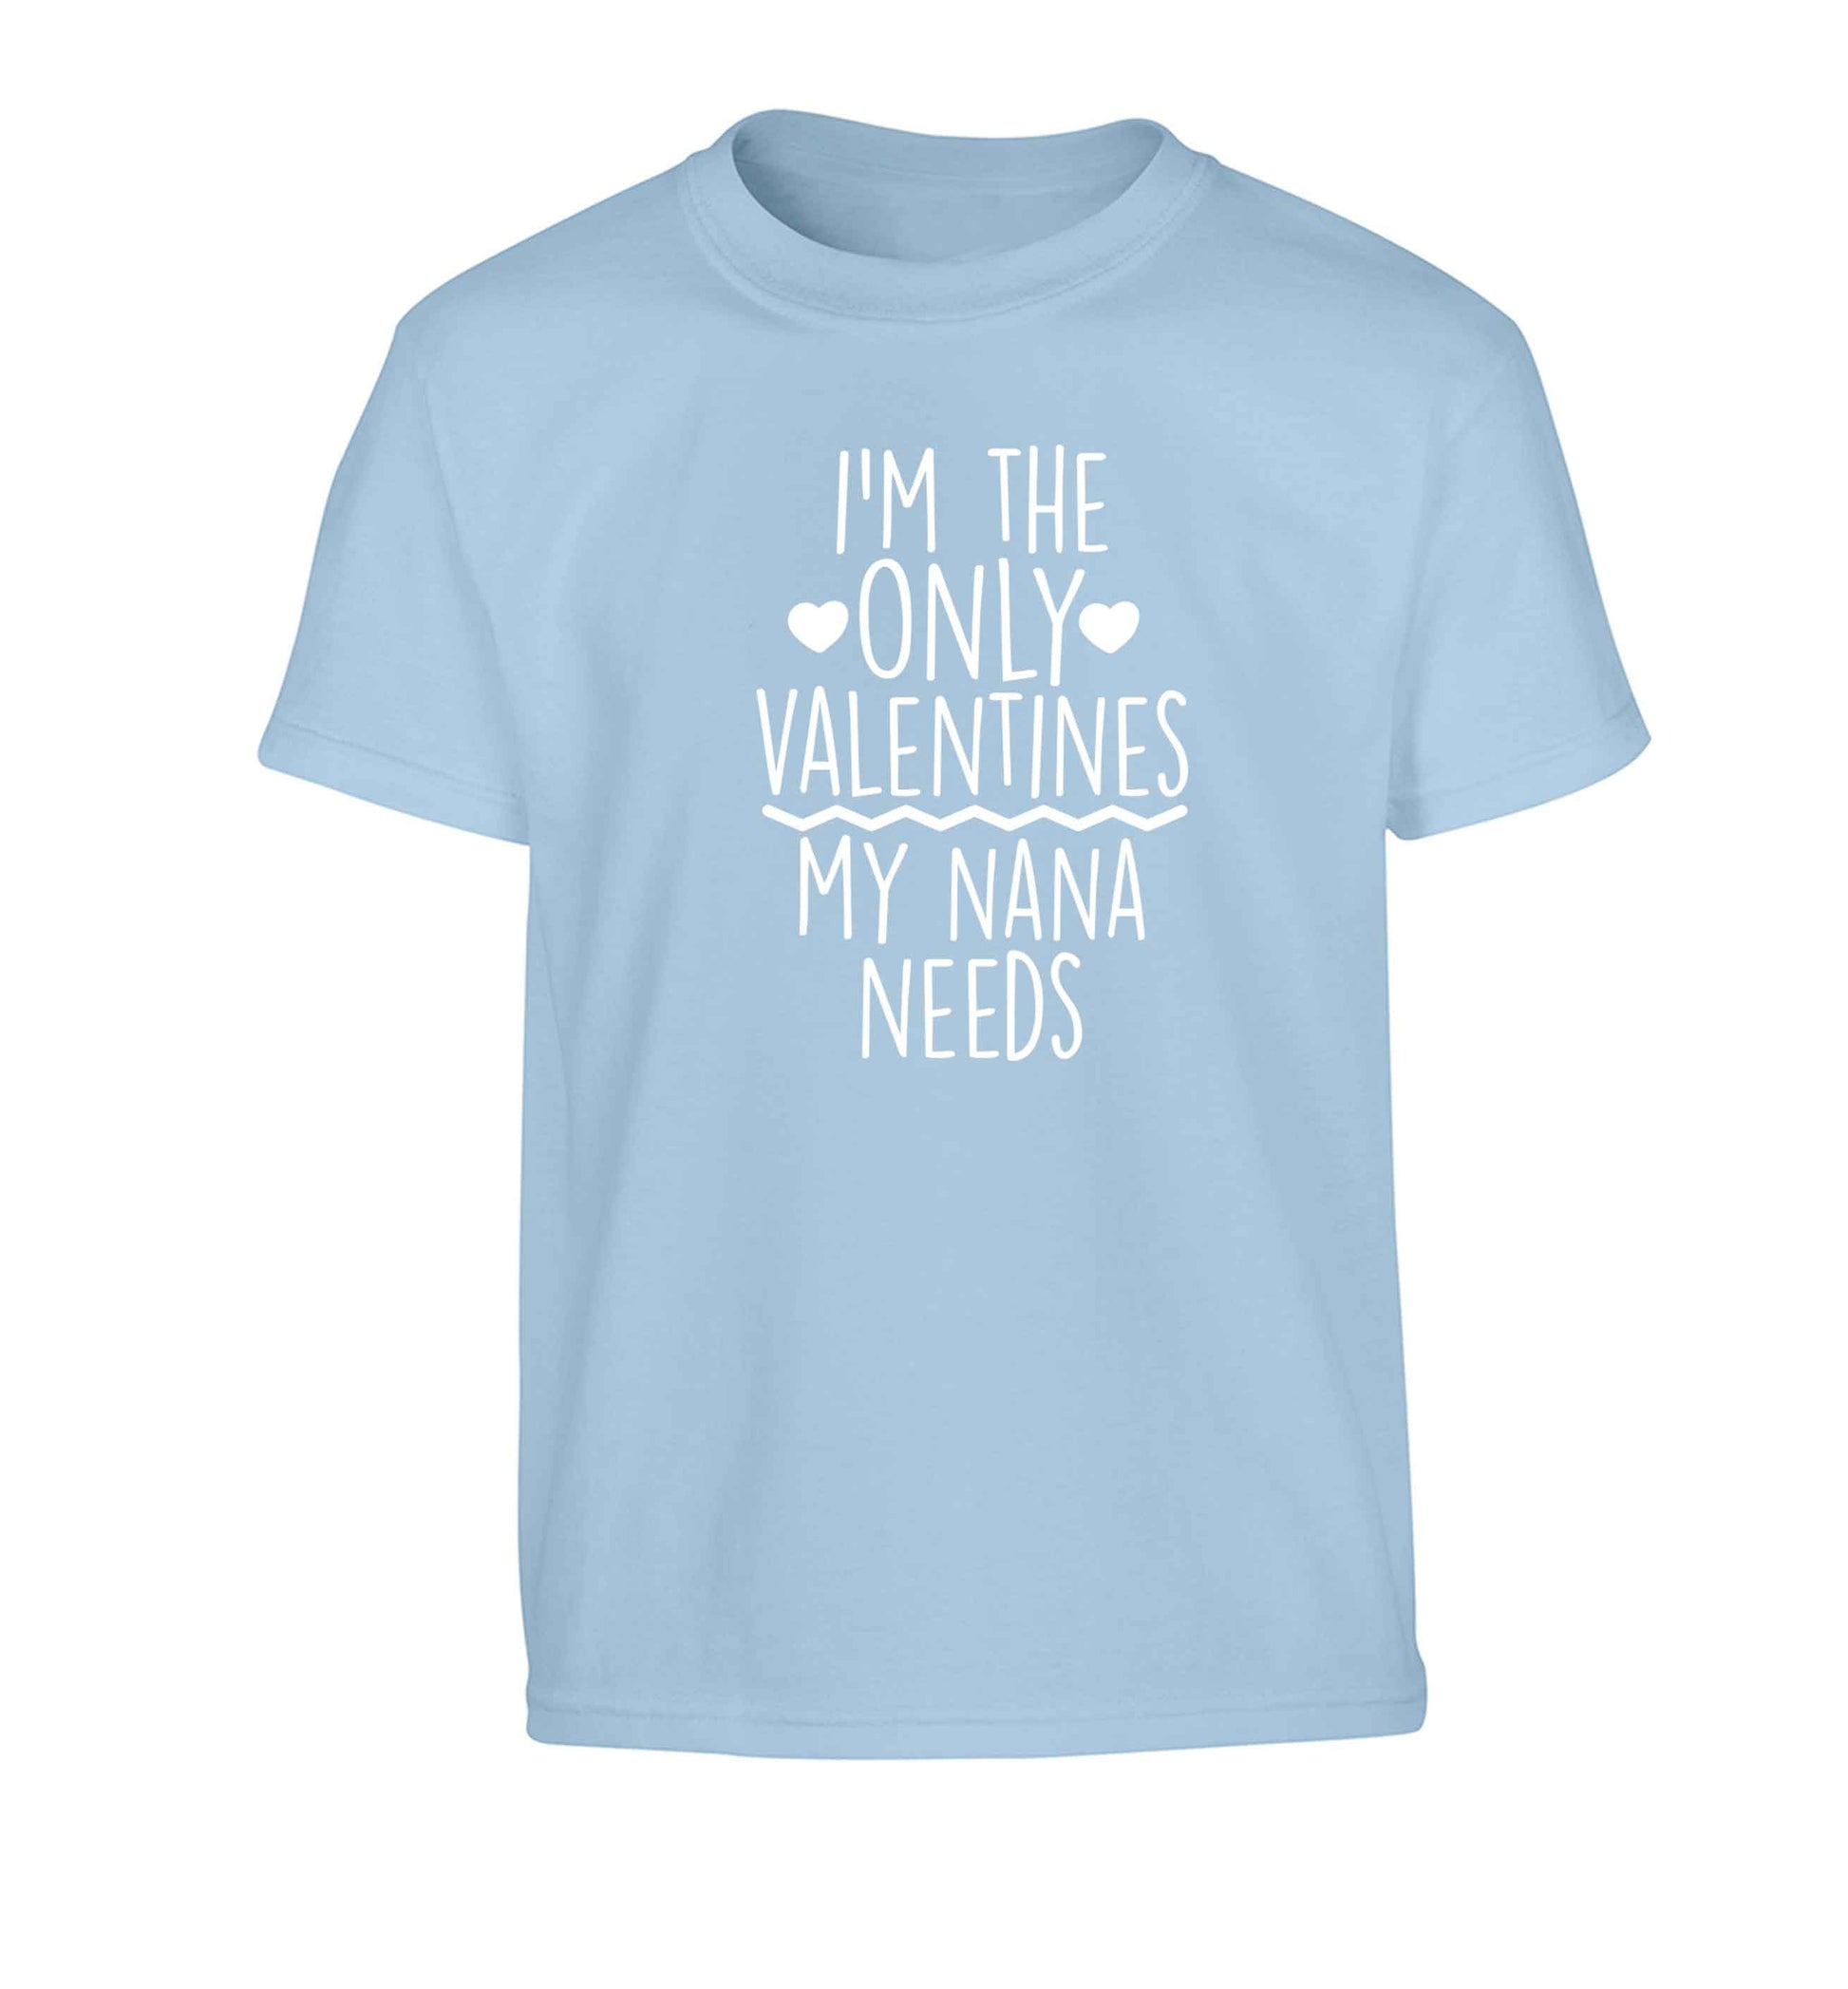 I'm the only valentines my nana needs Children's light blue Tshirt 12-13 Years